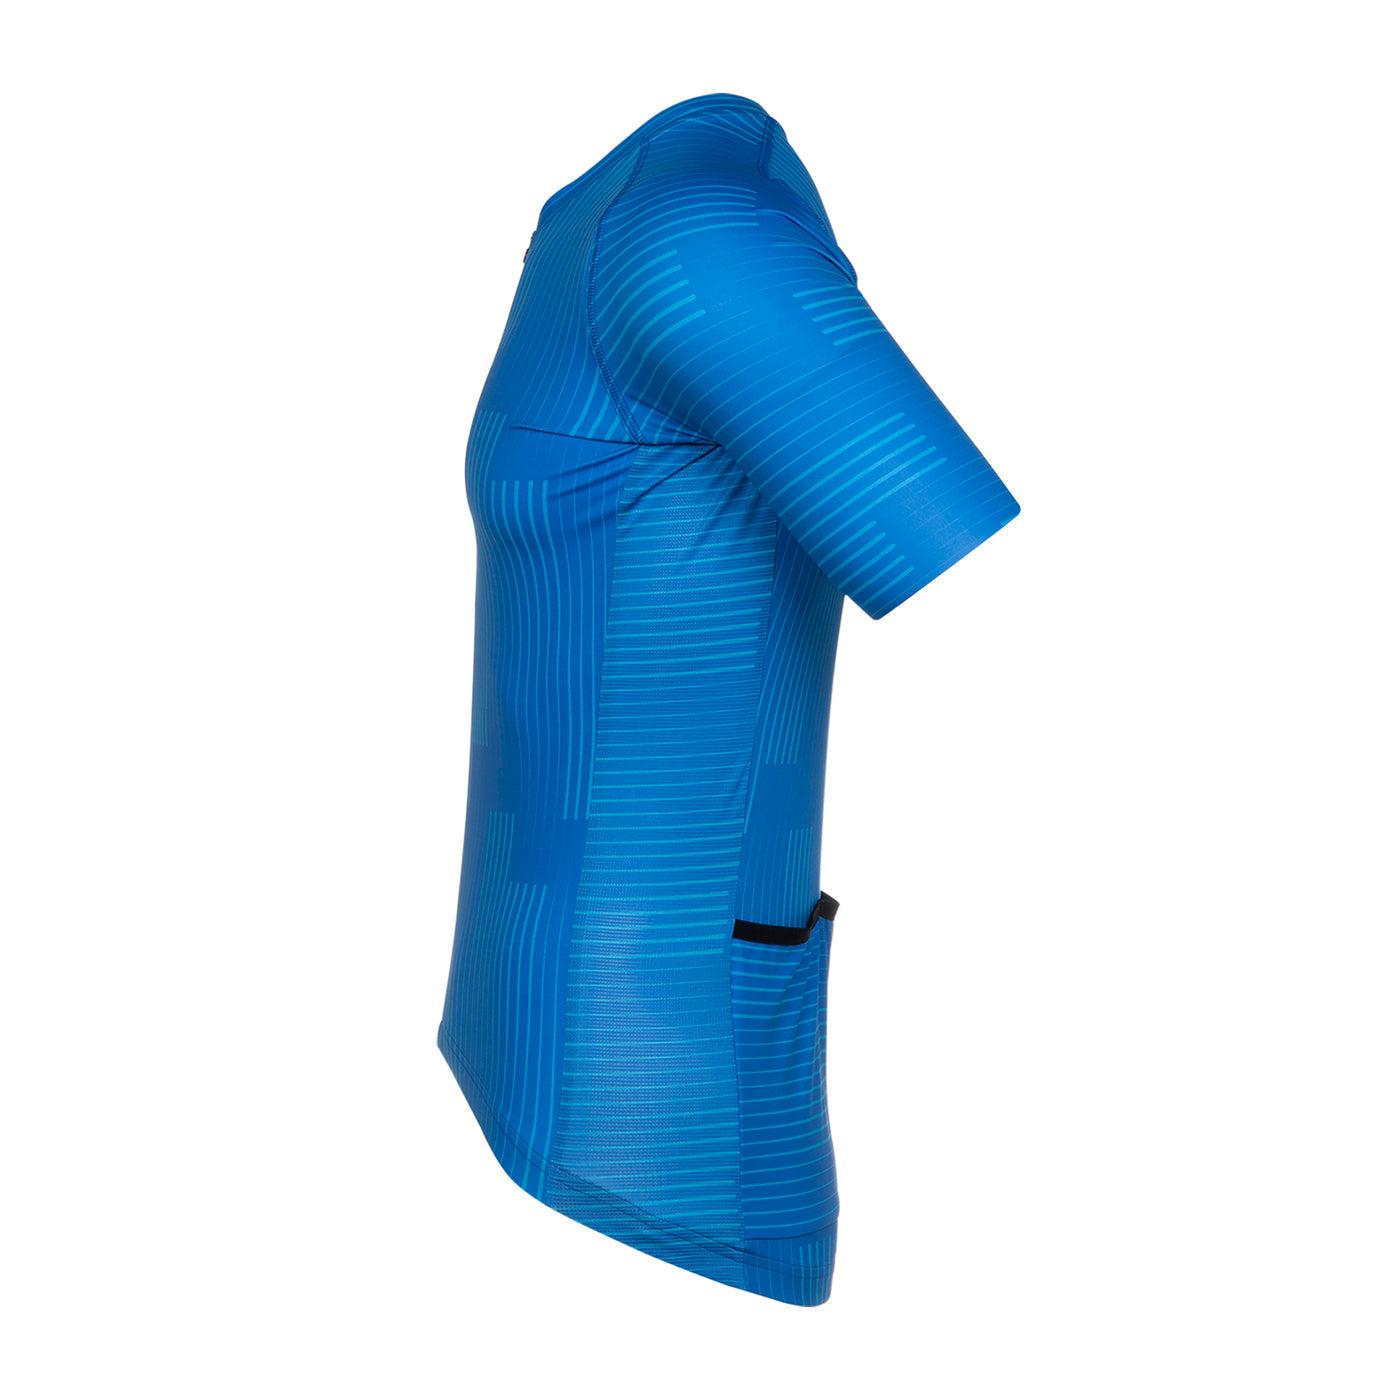 Bioracer Men's Spitfire Jersey - Wrap Blue - Cyclop.in